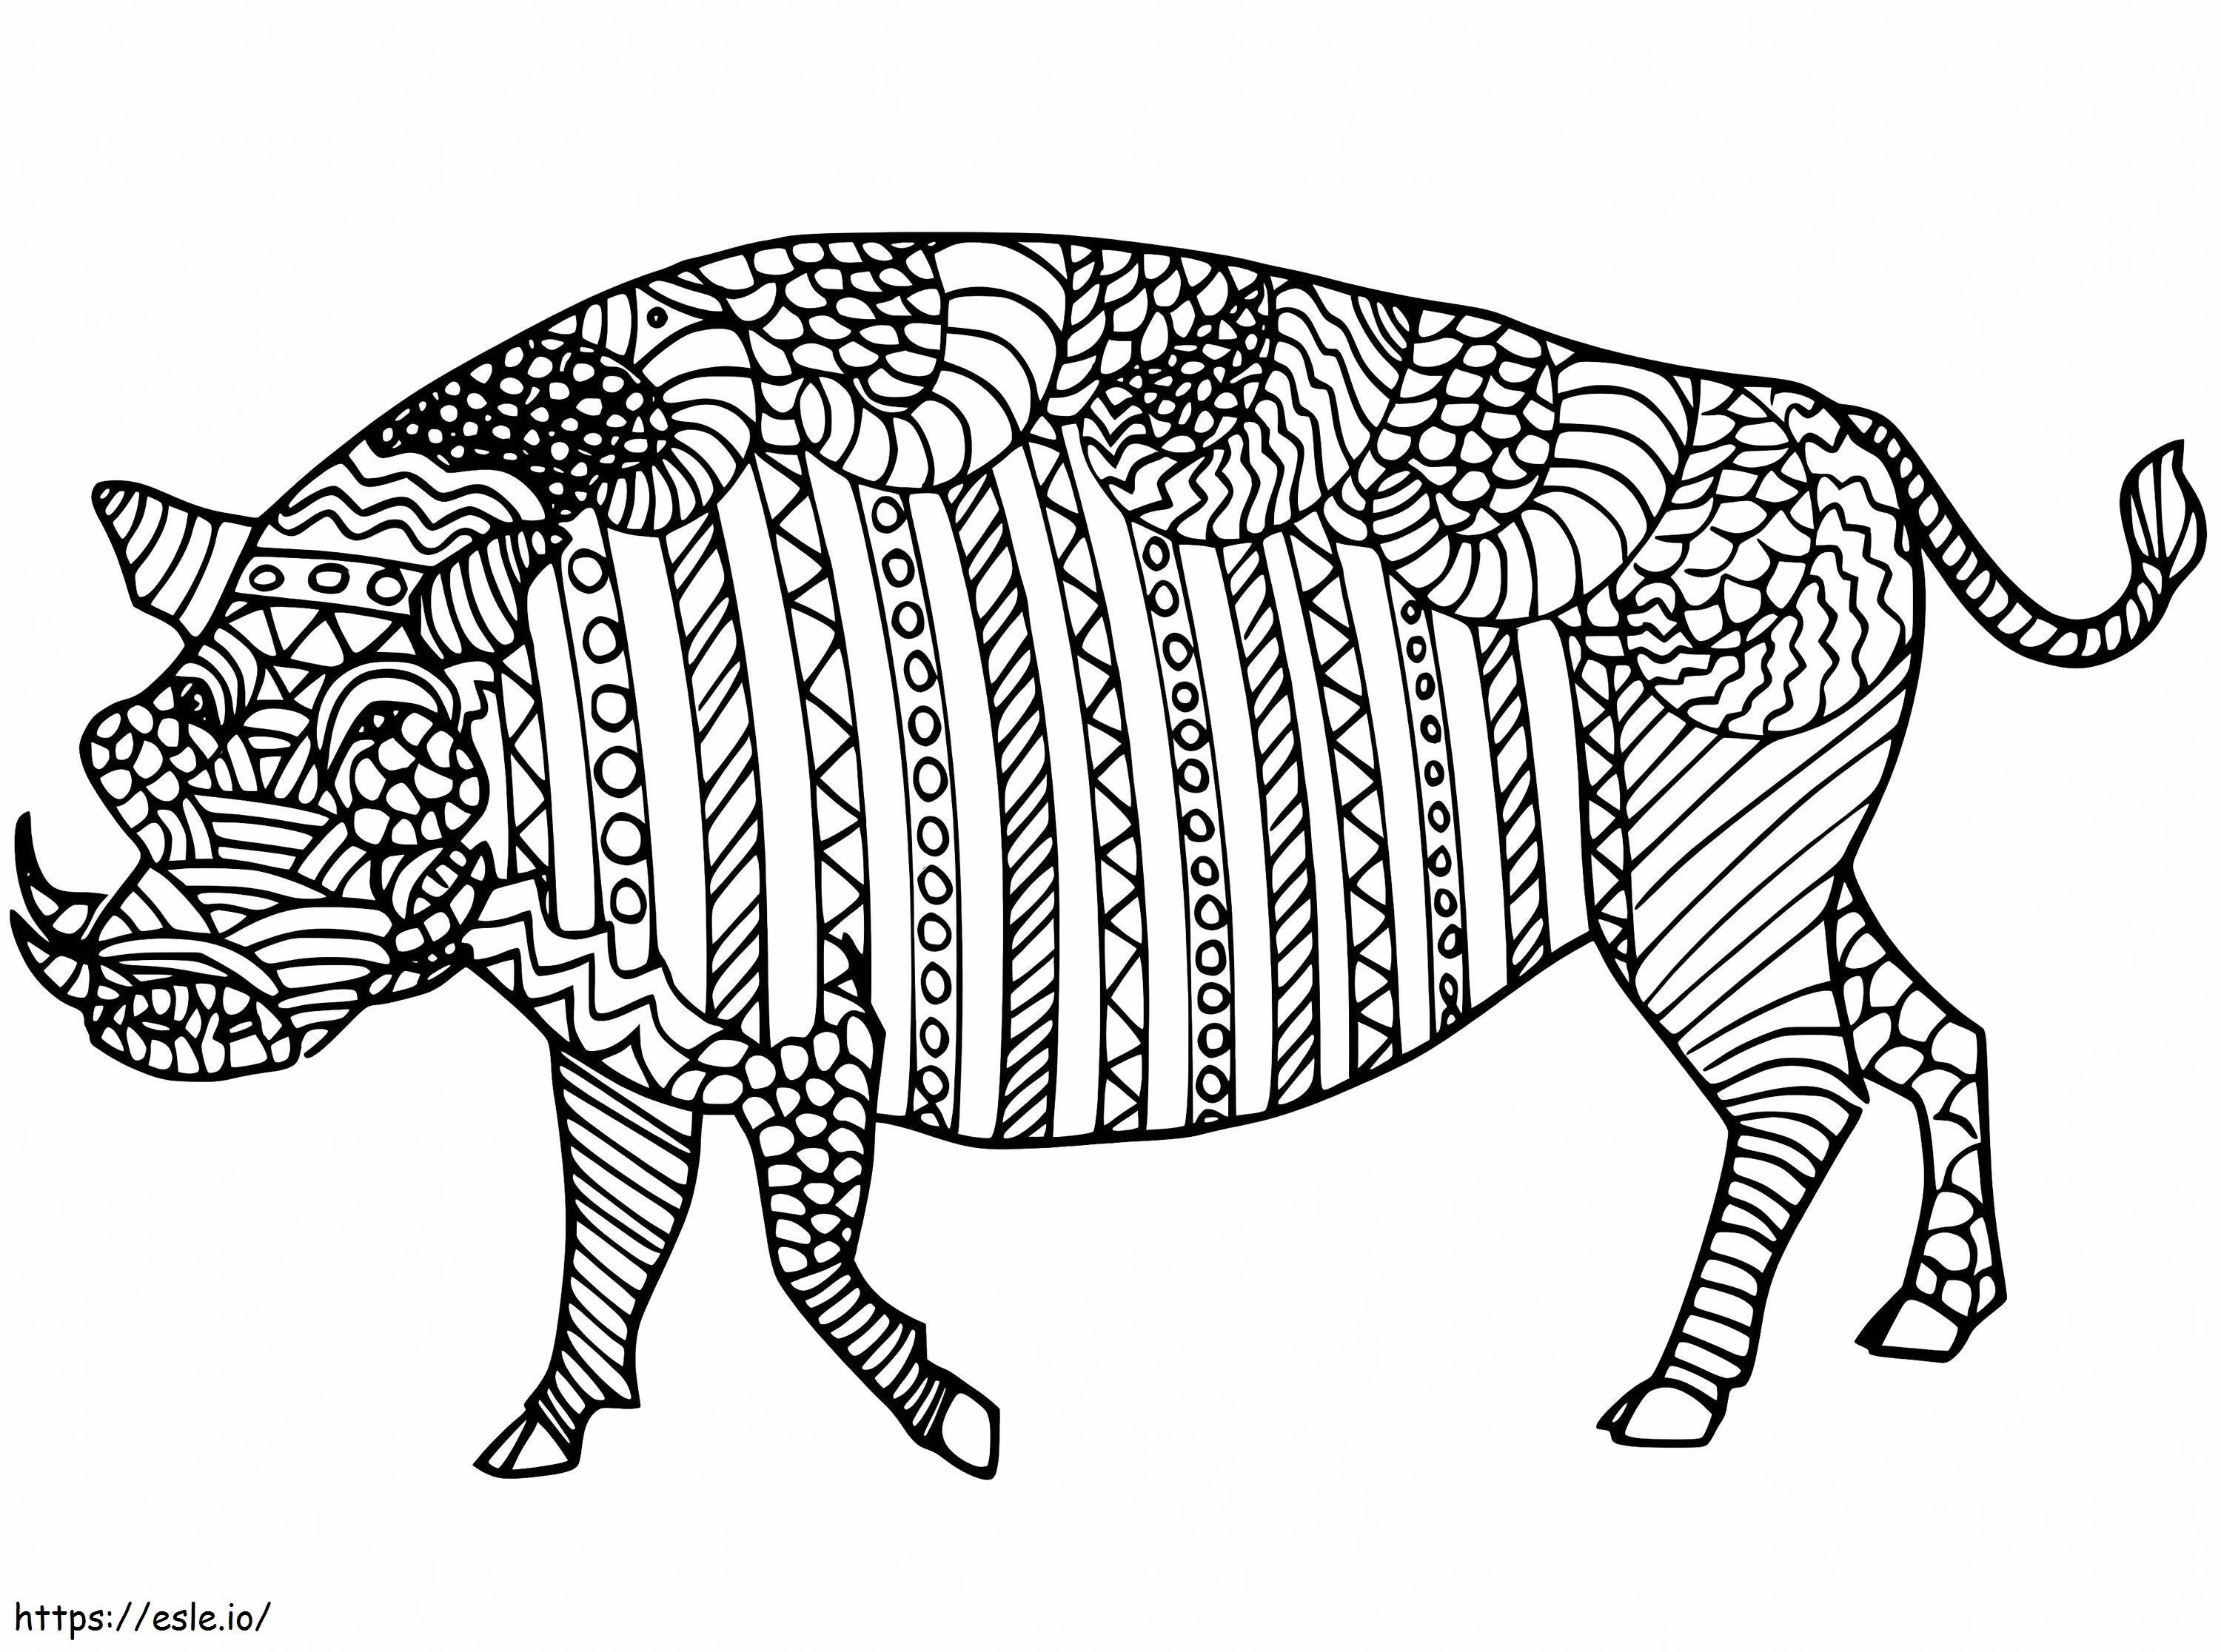 Zentangle Warzenschwein ausmalbilder